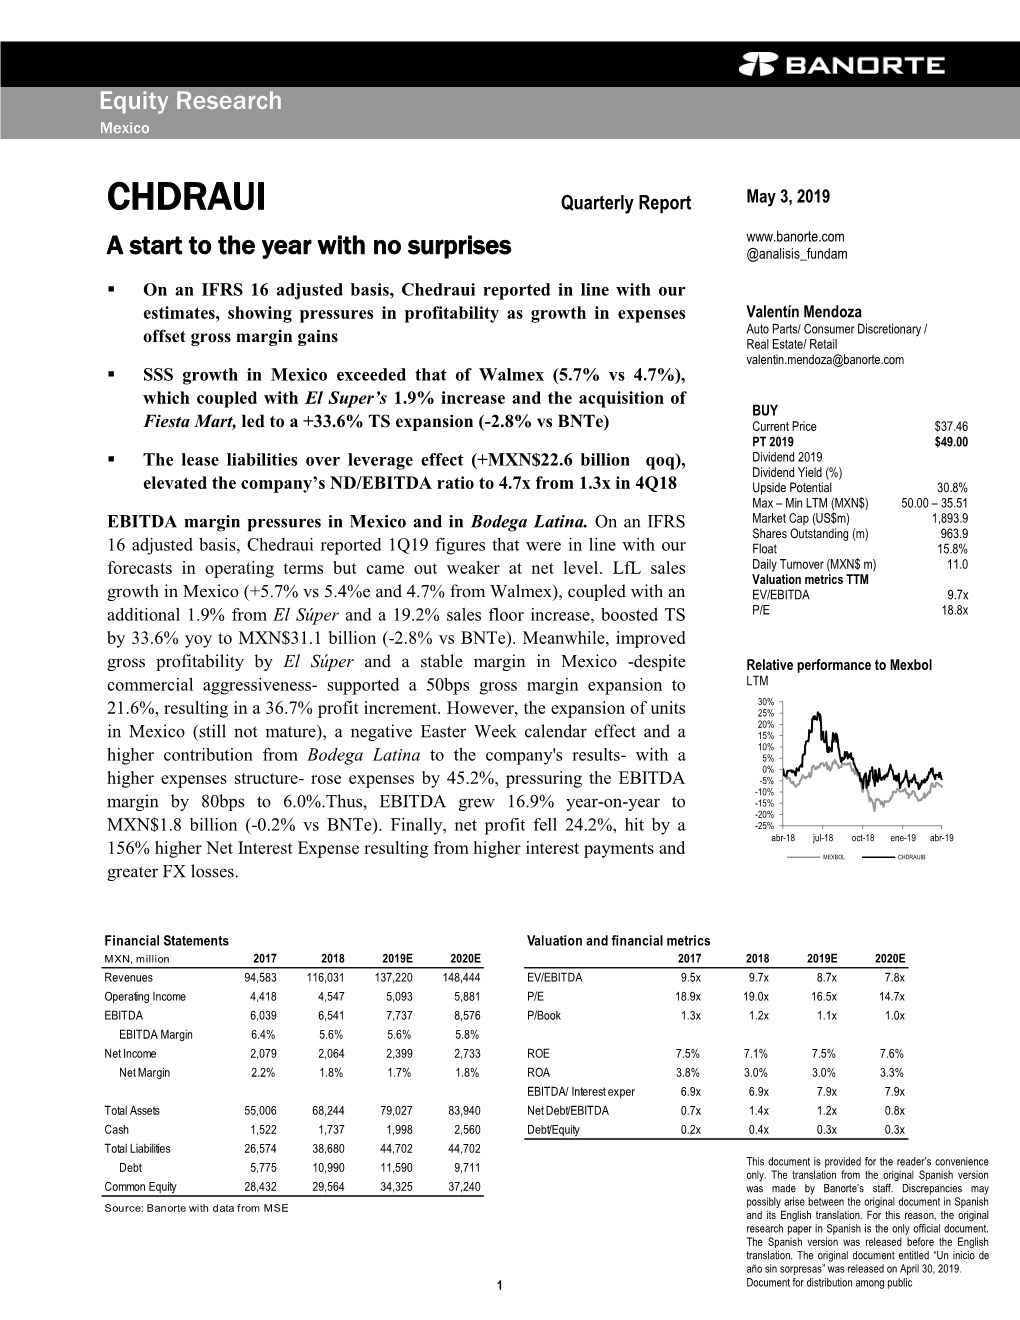 CHDRAUI Quarterly Report May 3, 2019